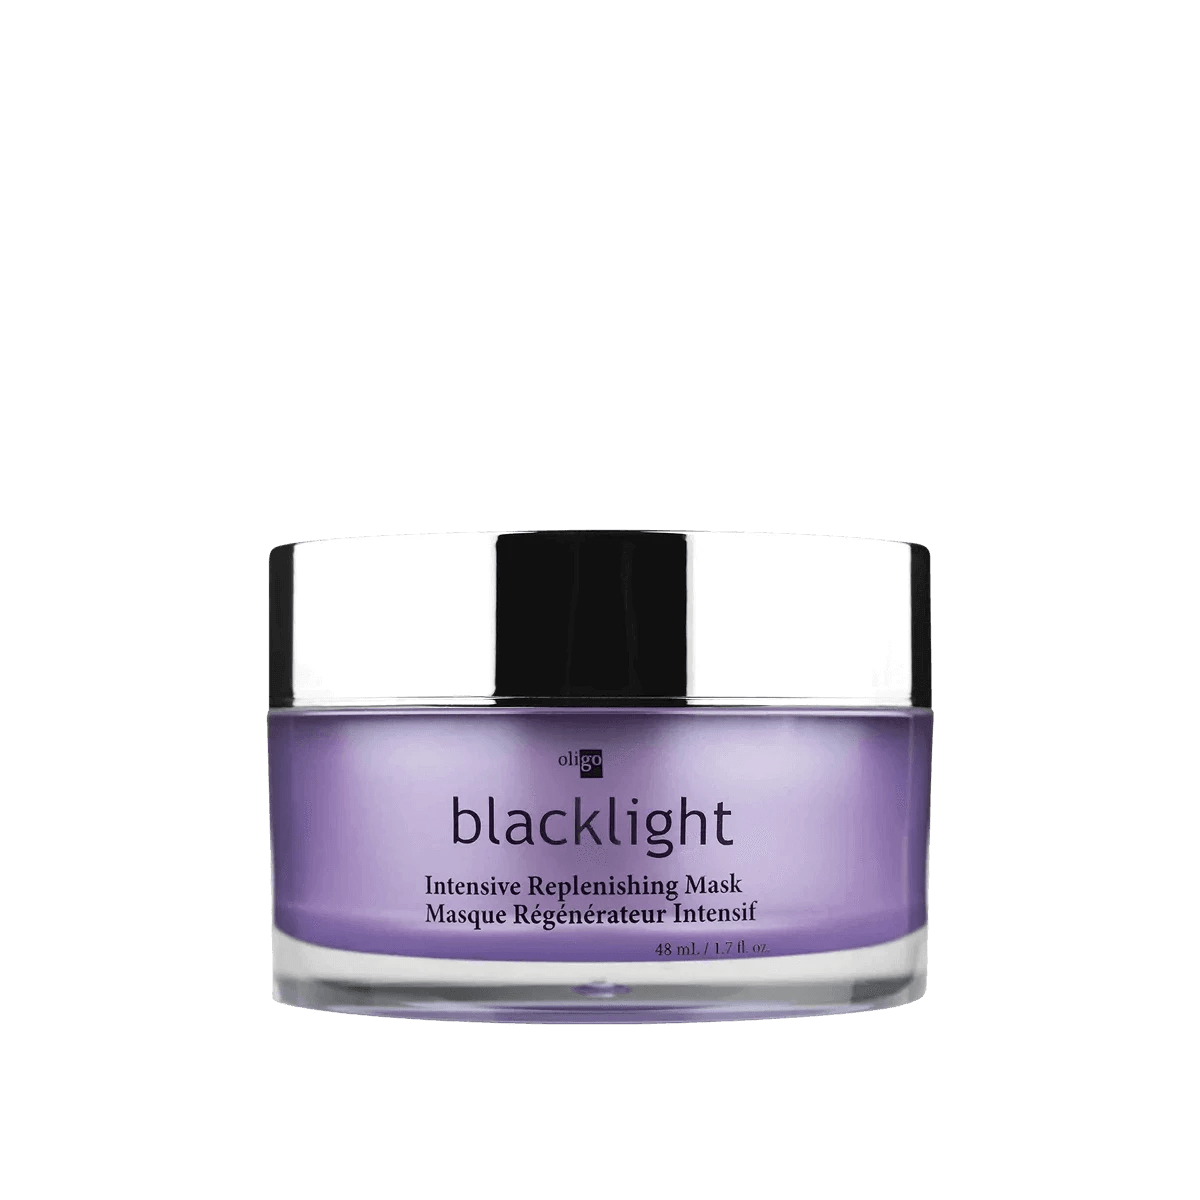 Oligo Blacklight Intensive Replenishing Mask a Conditioner from Simply Colour Hair Salon Studio & Online Store